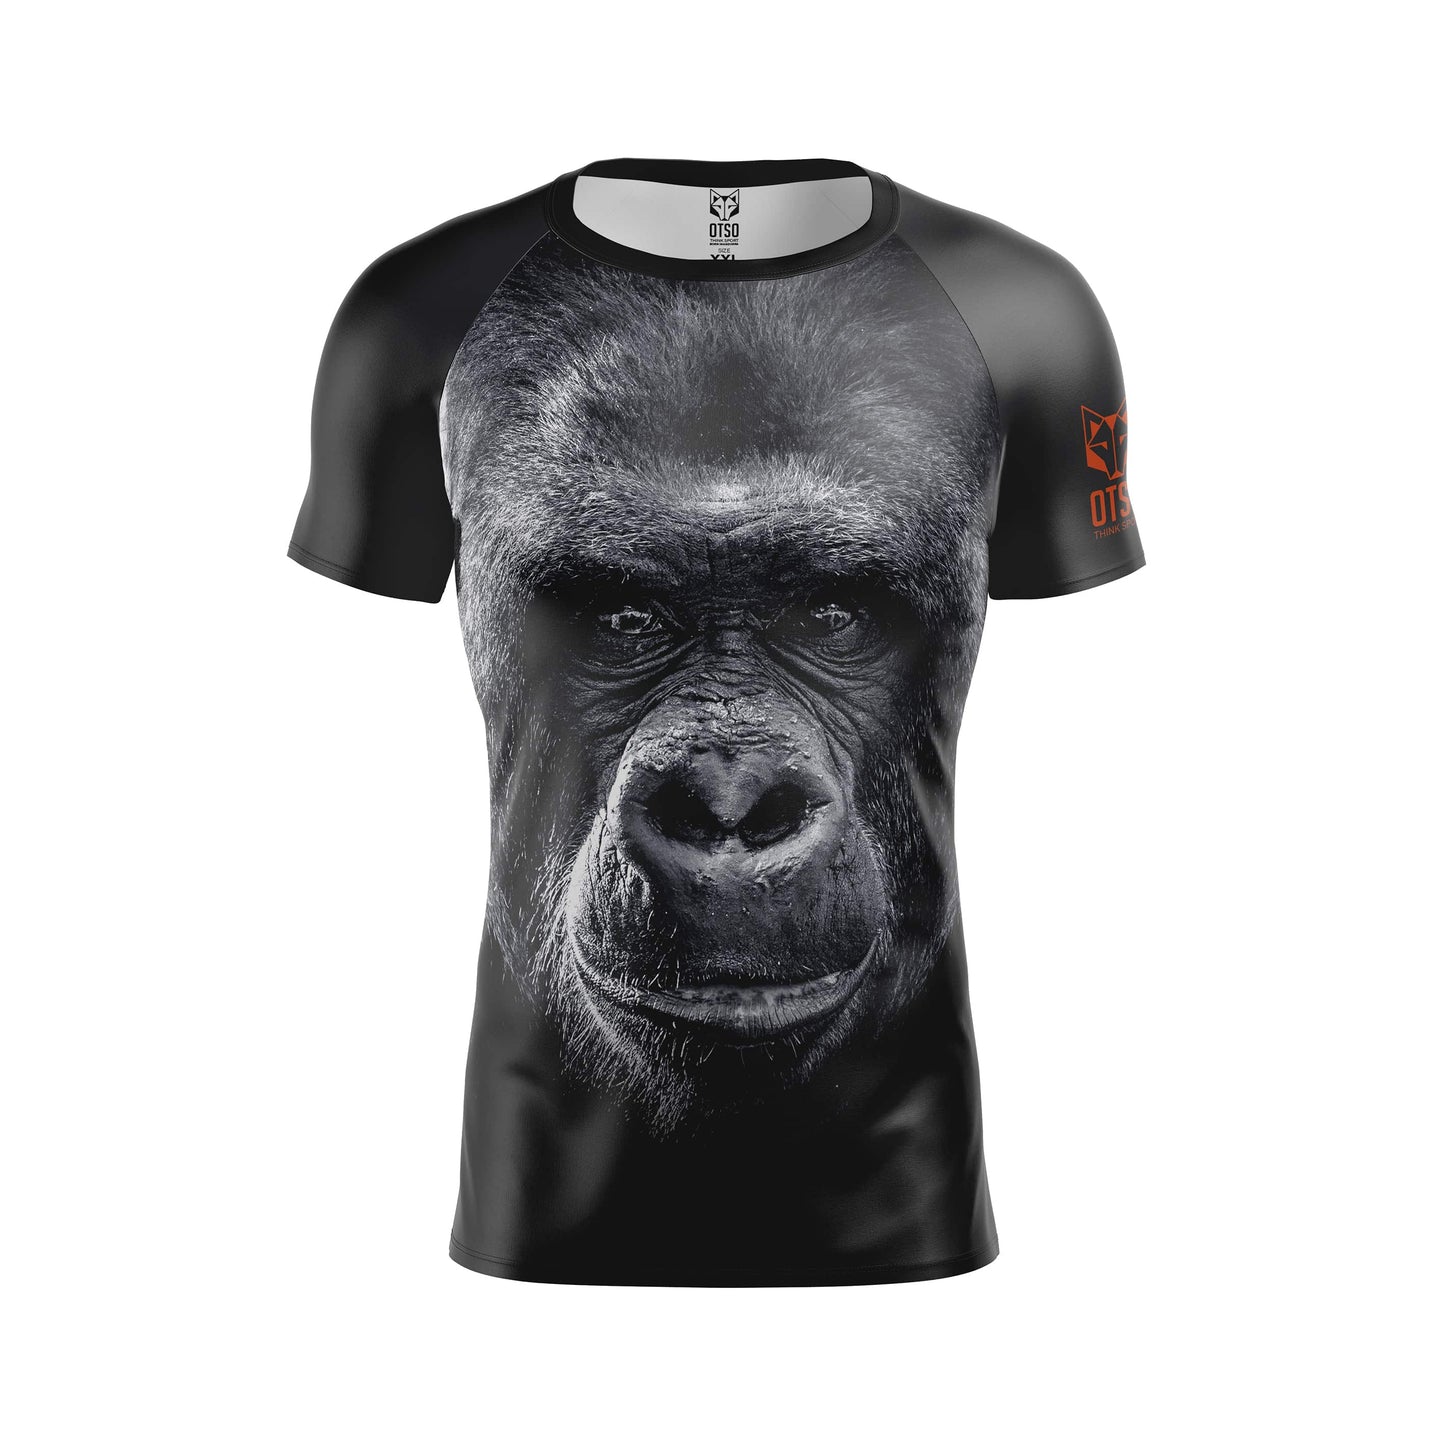 Camiseta manga corta hombre - Gorilla